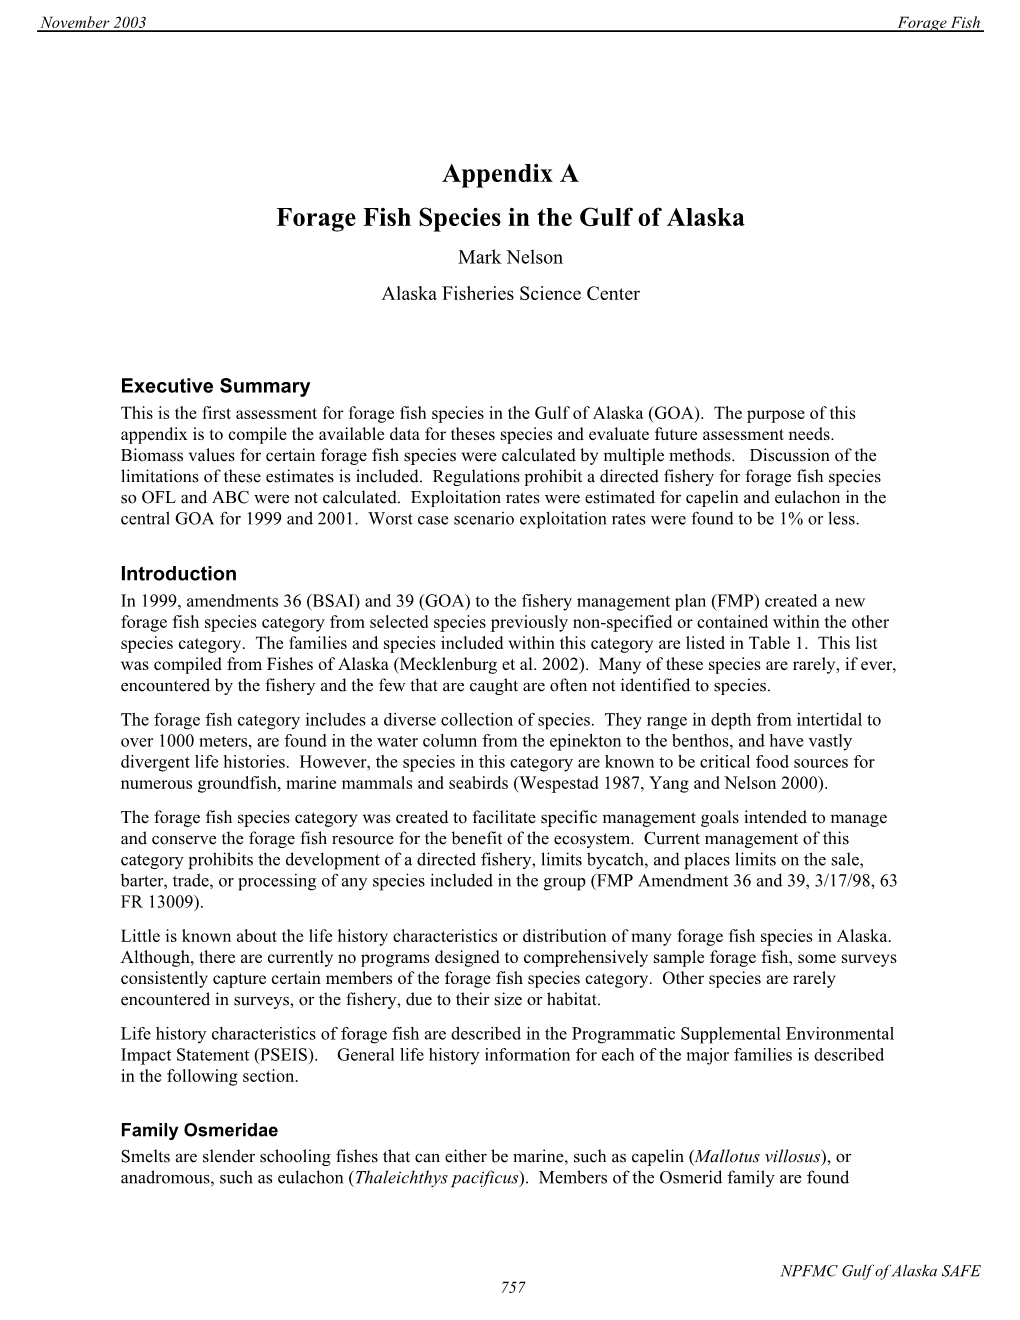 Gulf of Alaska Forage Fish Assessment